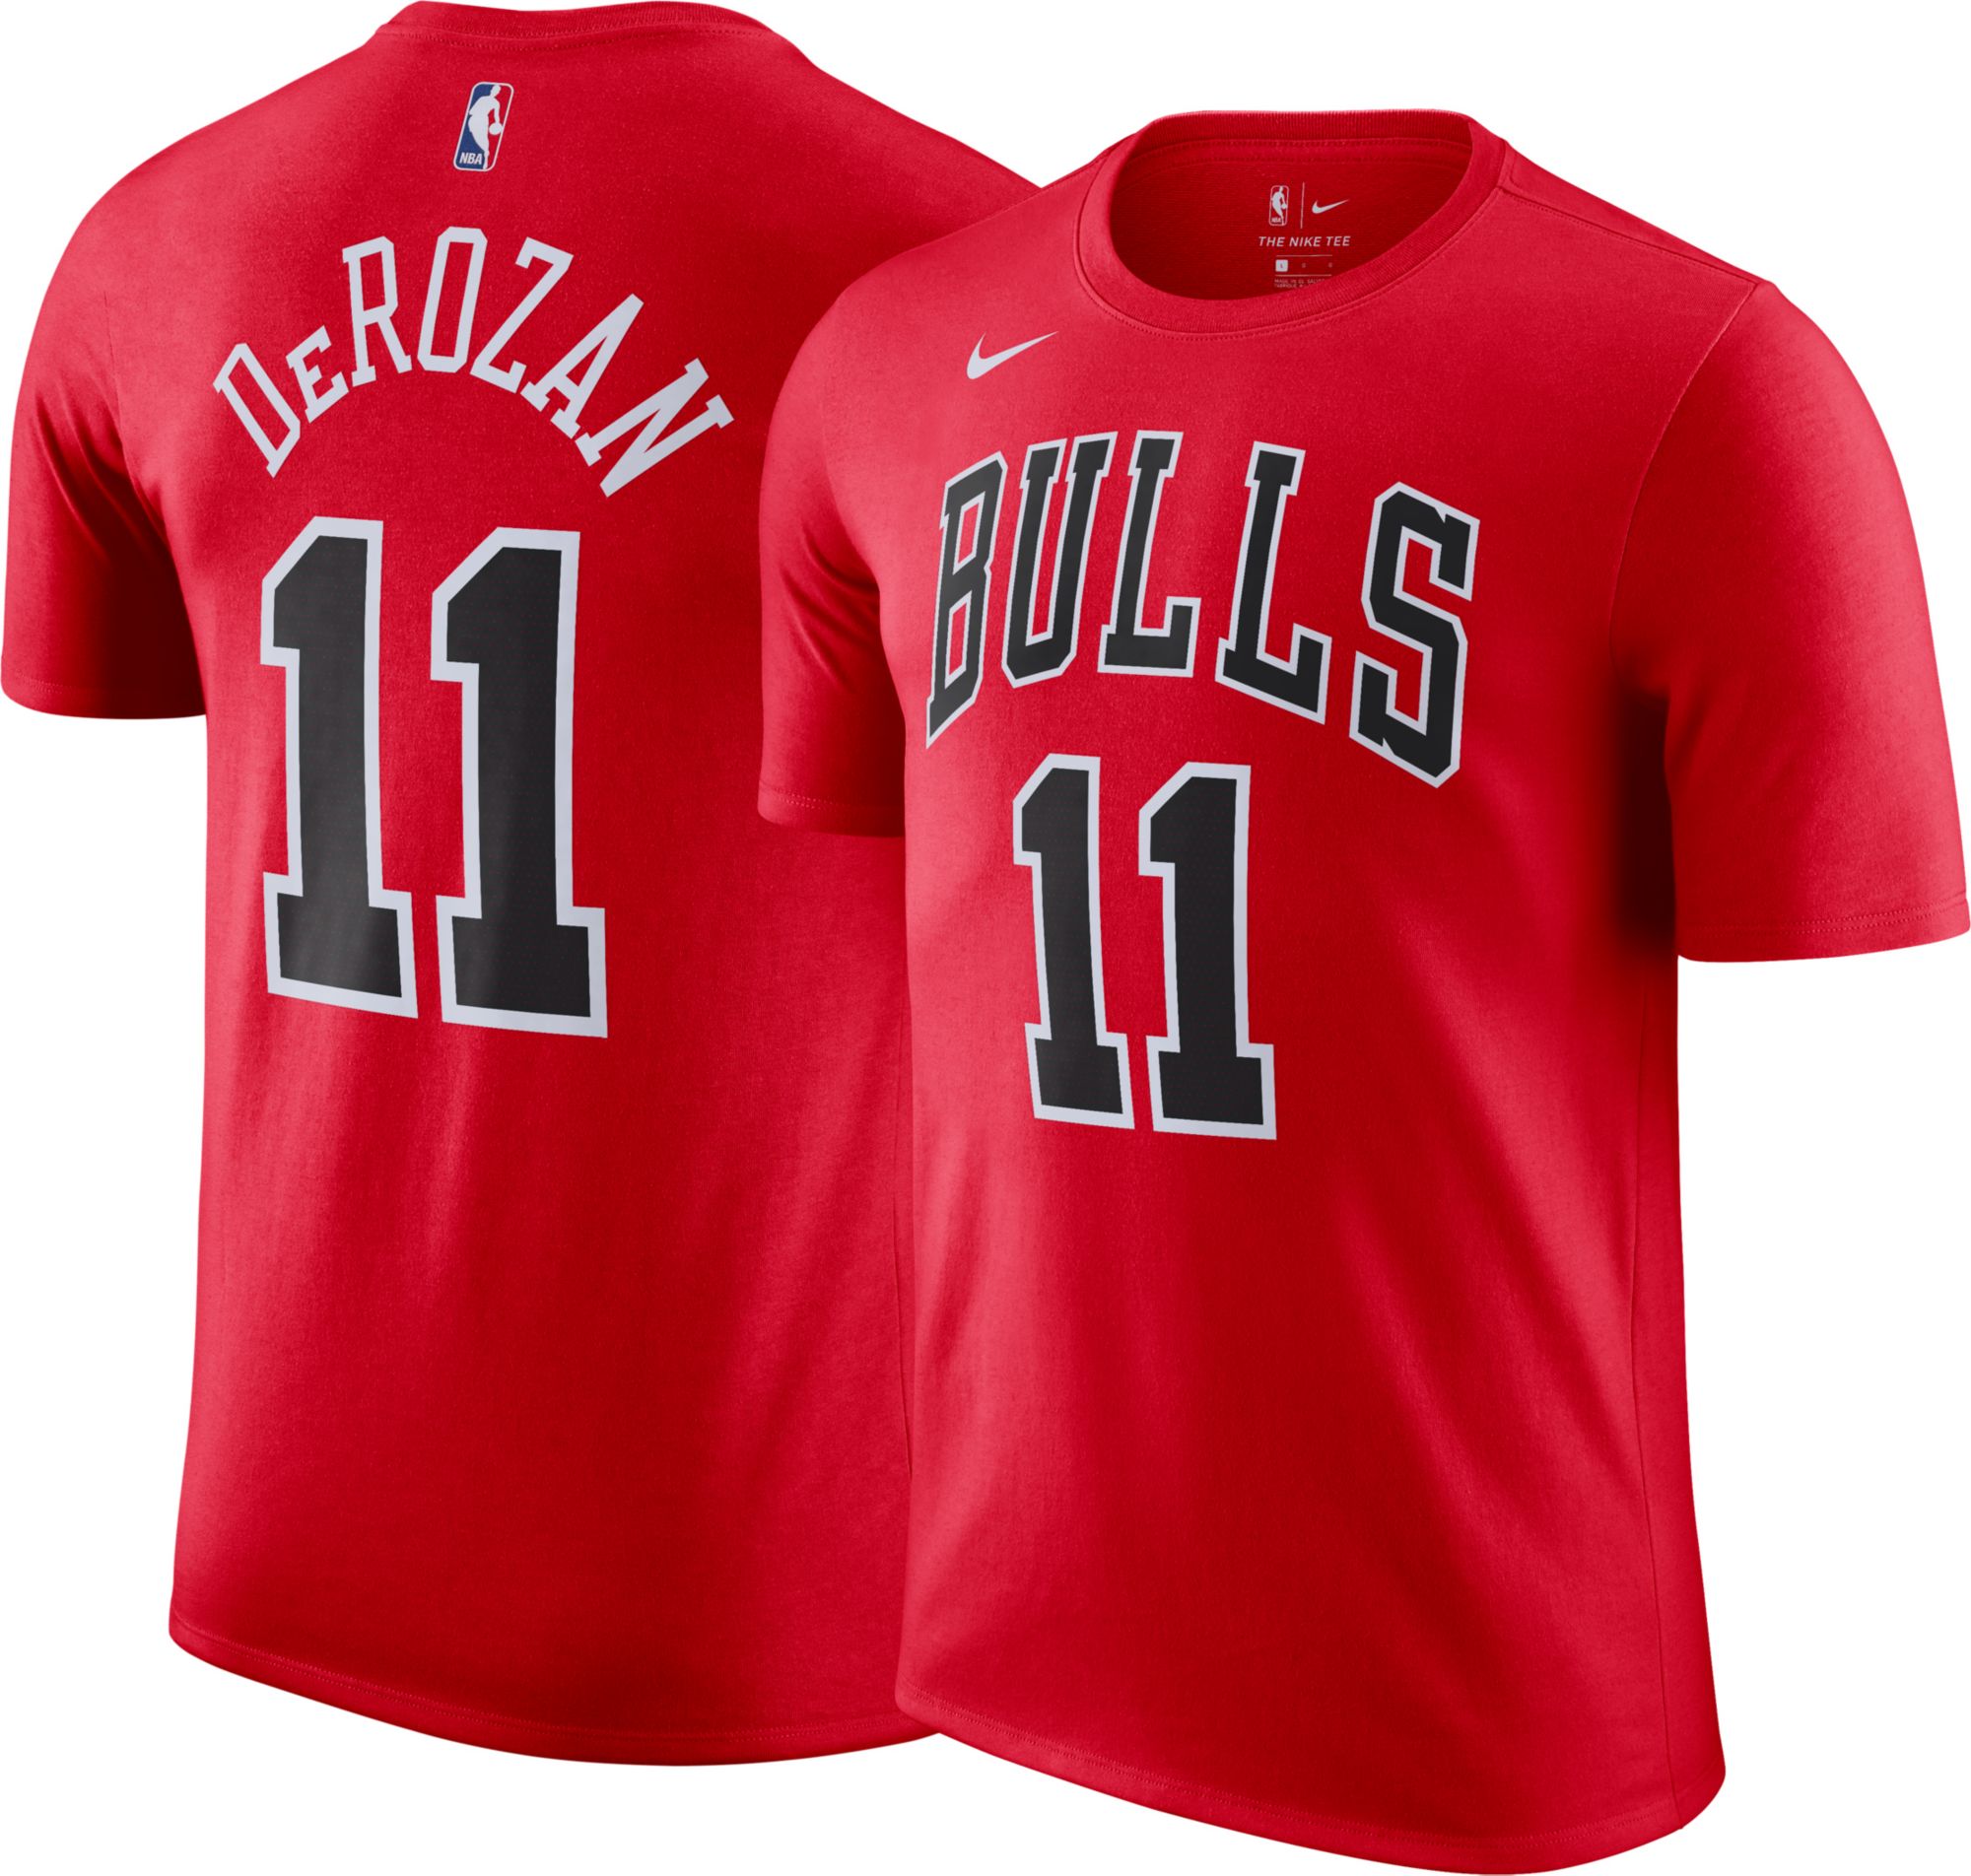 Nike Men's Chicago Bulls Demar Derozan #11 Red Dri-FIT Swingman Jersey